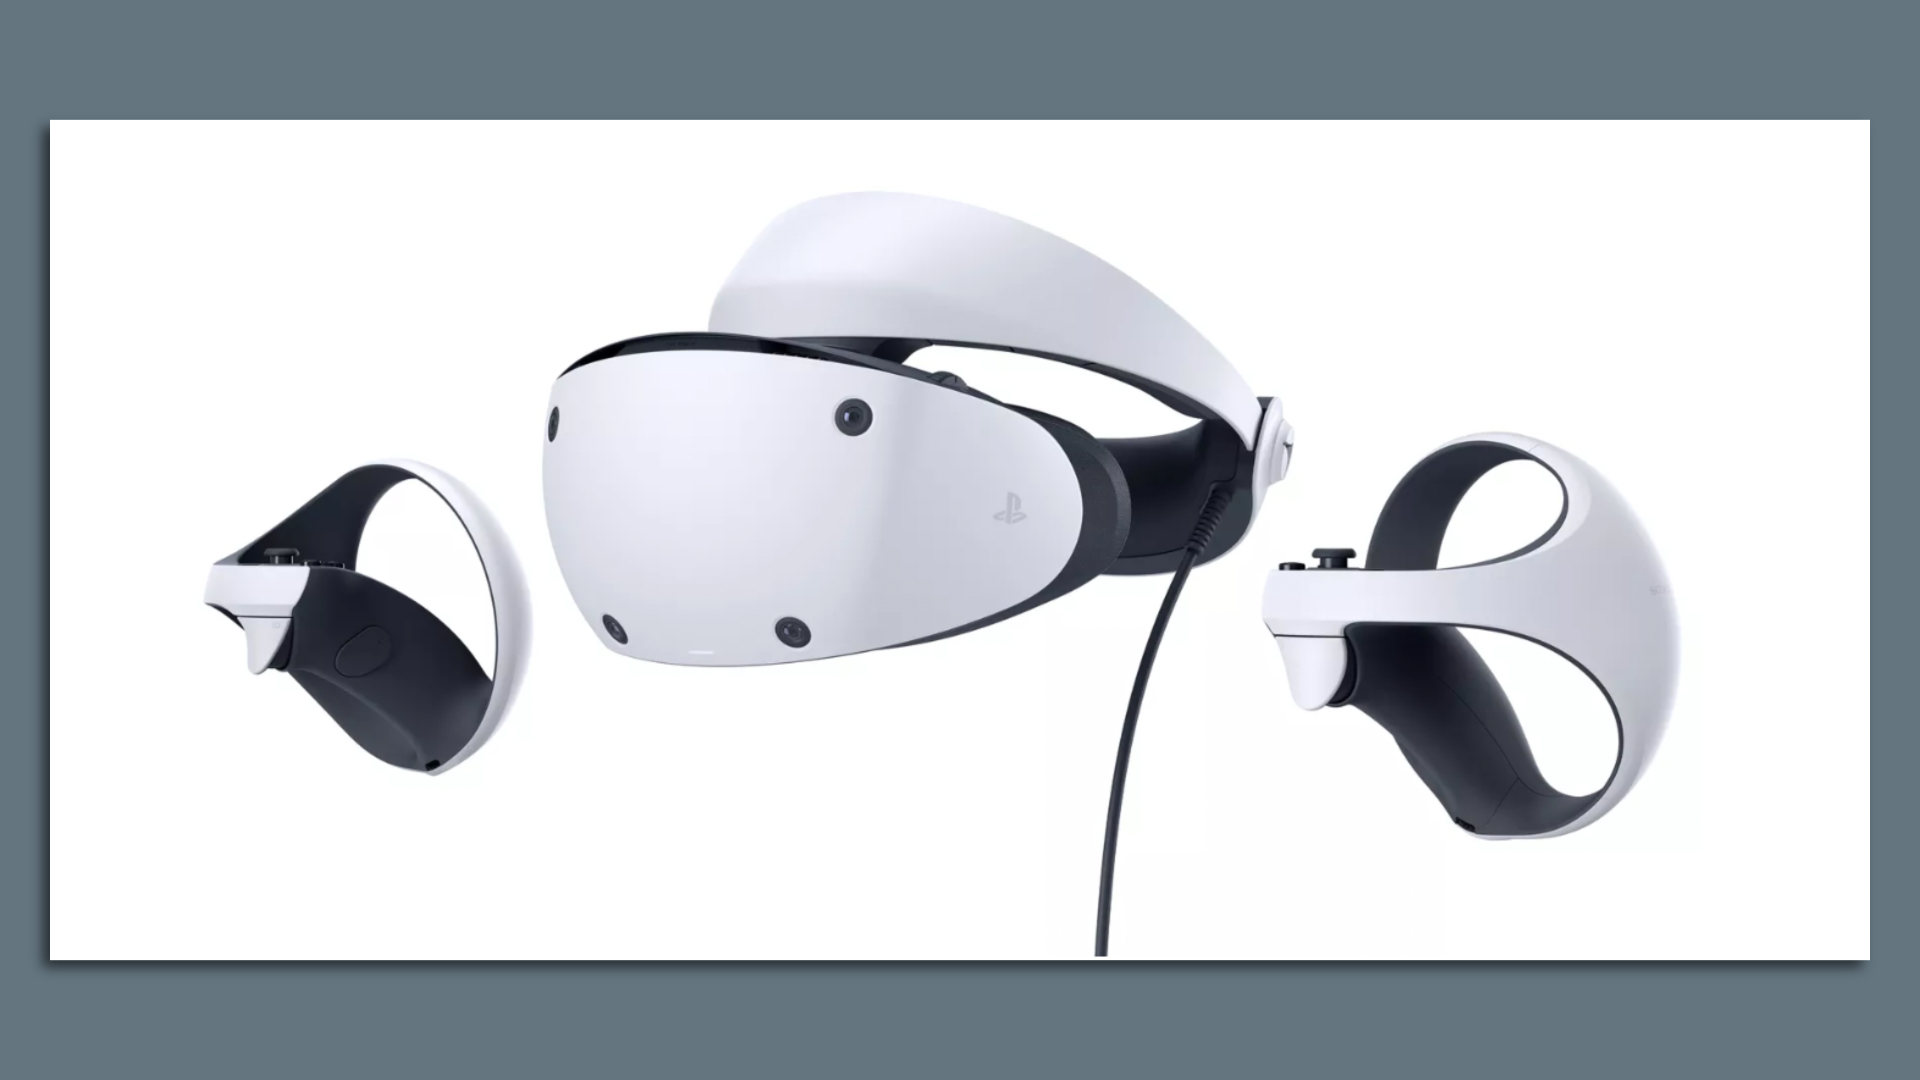 Sony's PSVR2 virtual reality headset.